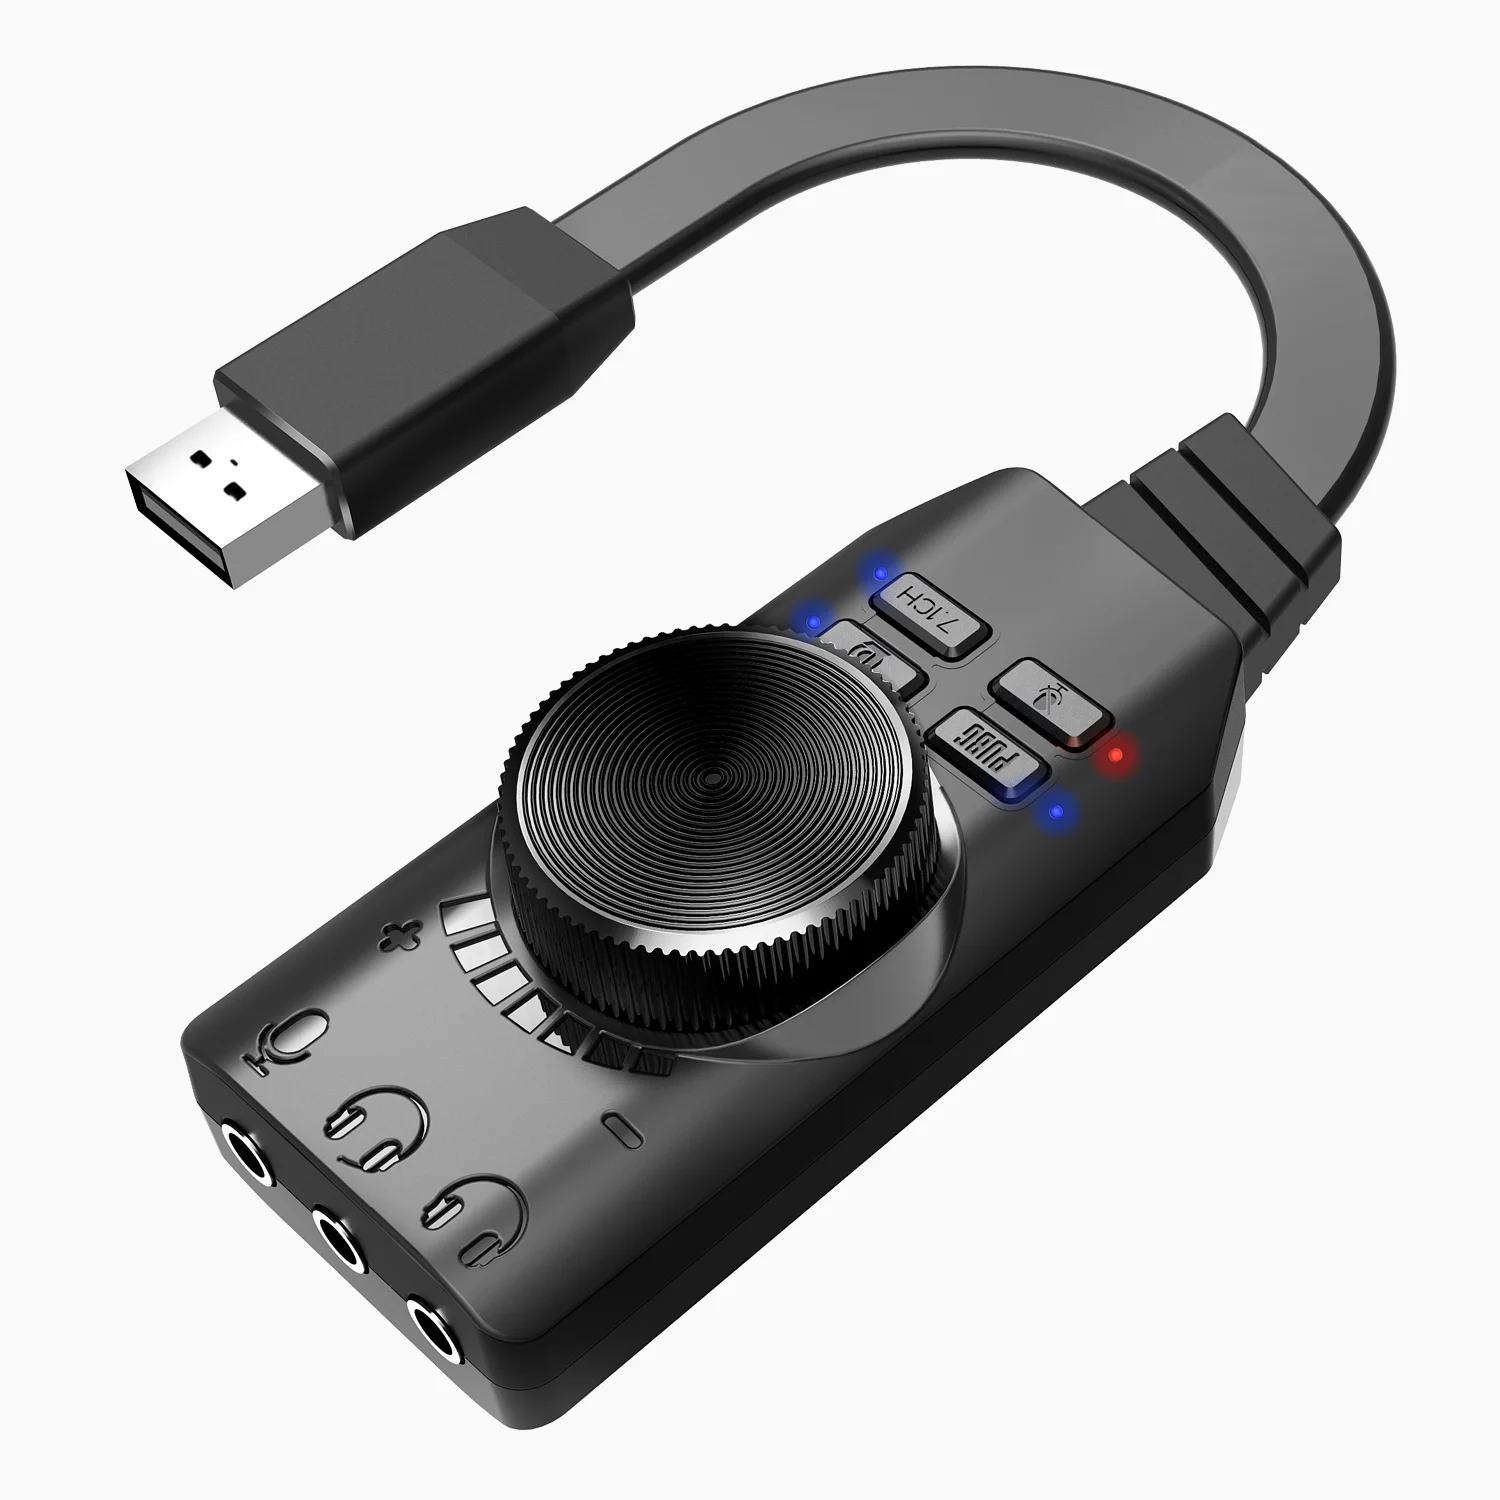 

Plextone GS3 Virtual 7.1 Channel USB Sound Card Adapter 3.5mm Headphone Audio Jack Stereo Sound Card Converter, Black